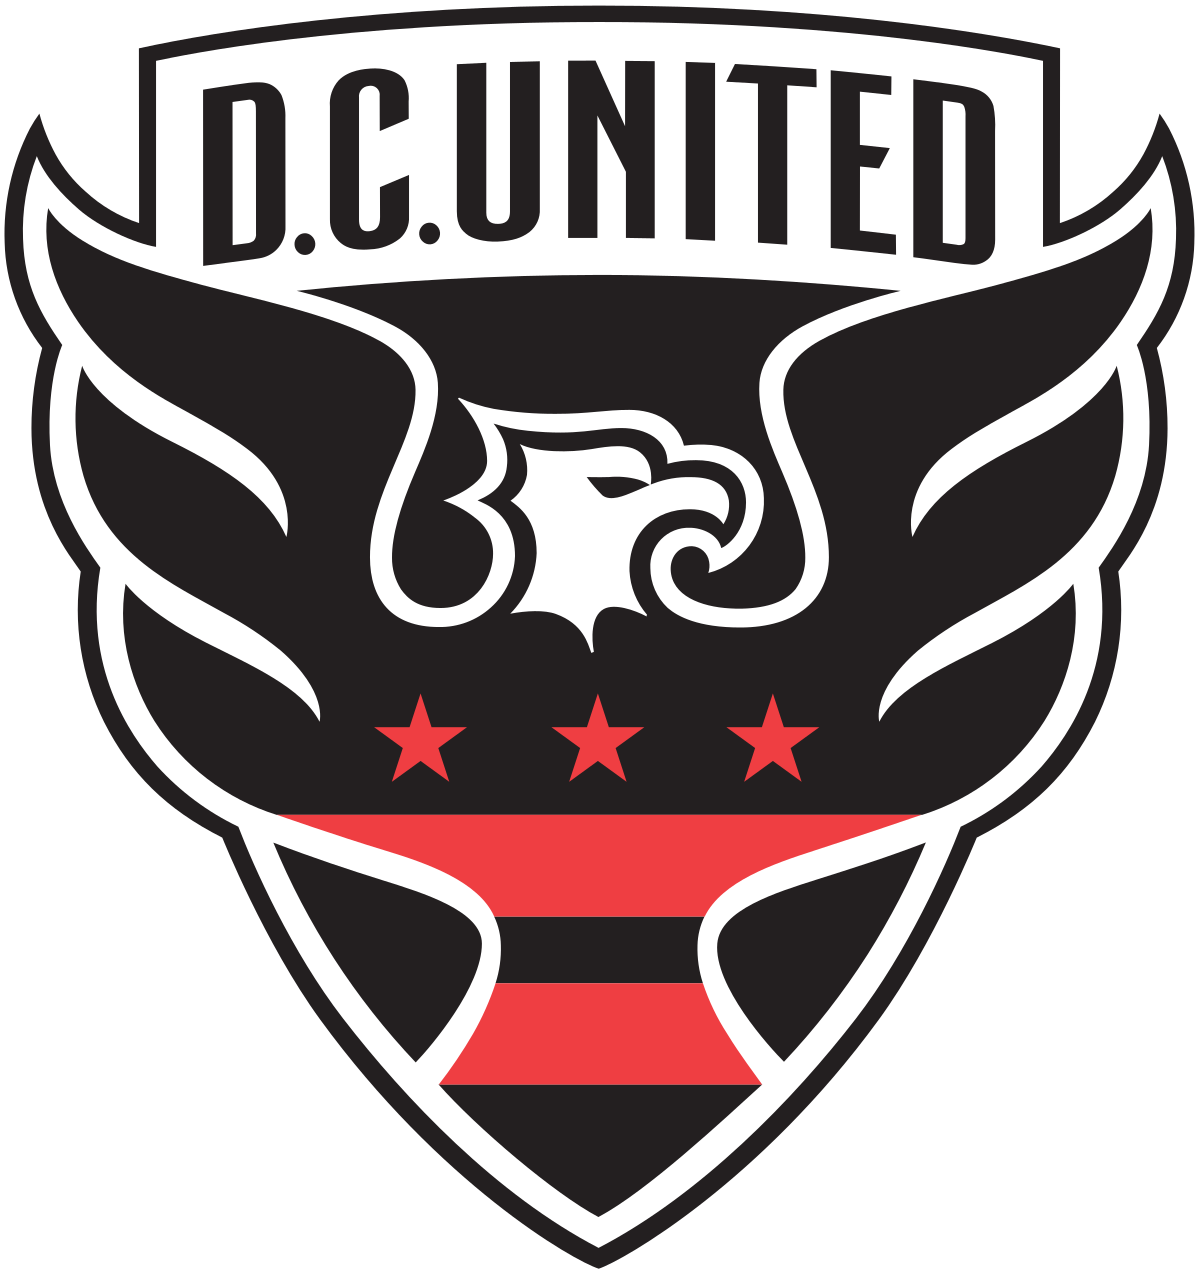 D.C. United Team History